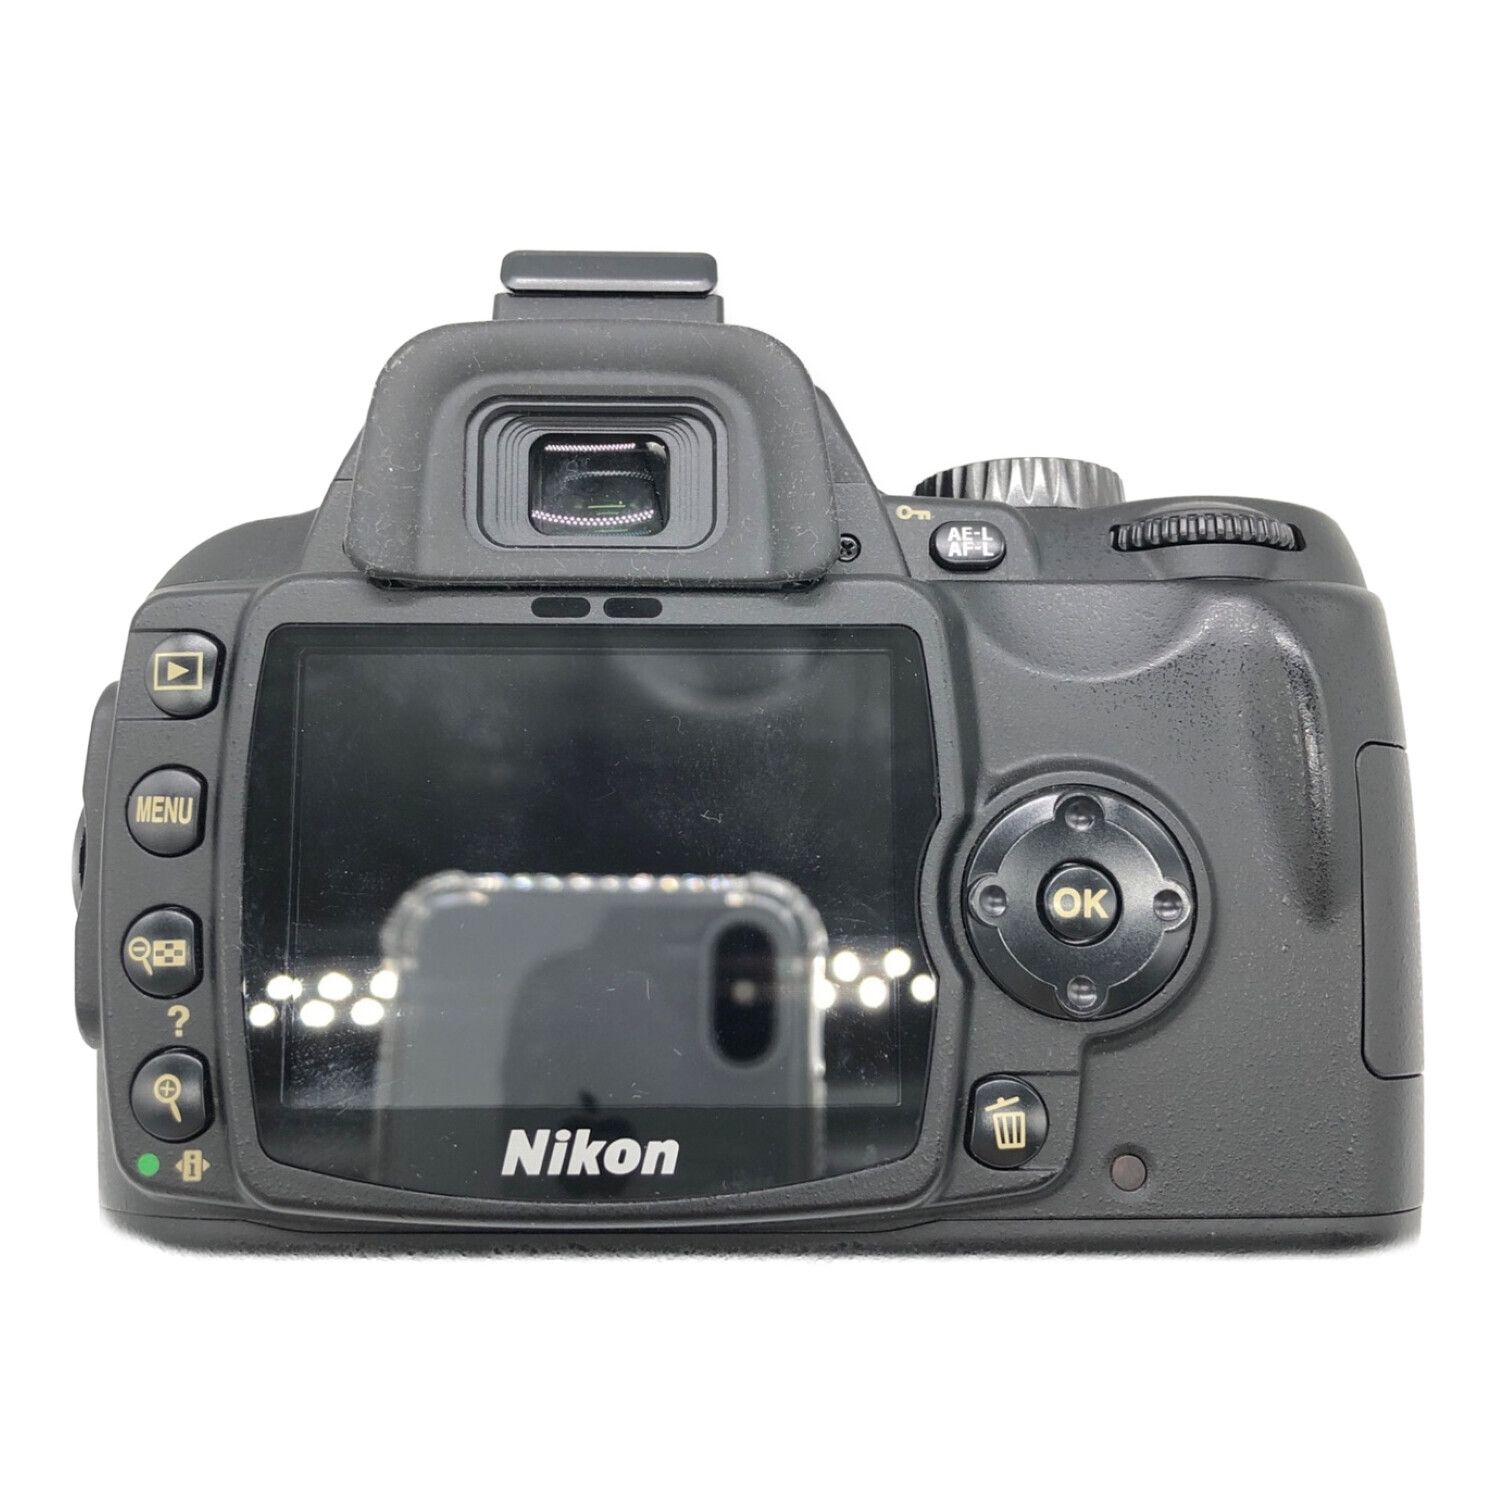 Nikon (ニコン) デジタル一眼レフカメラ D60 1075万画素 APS-C 専用 ...